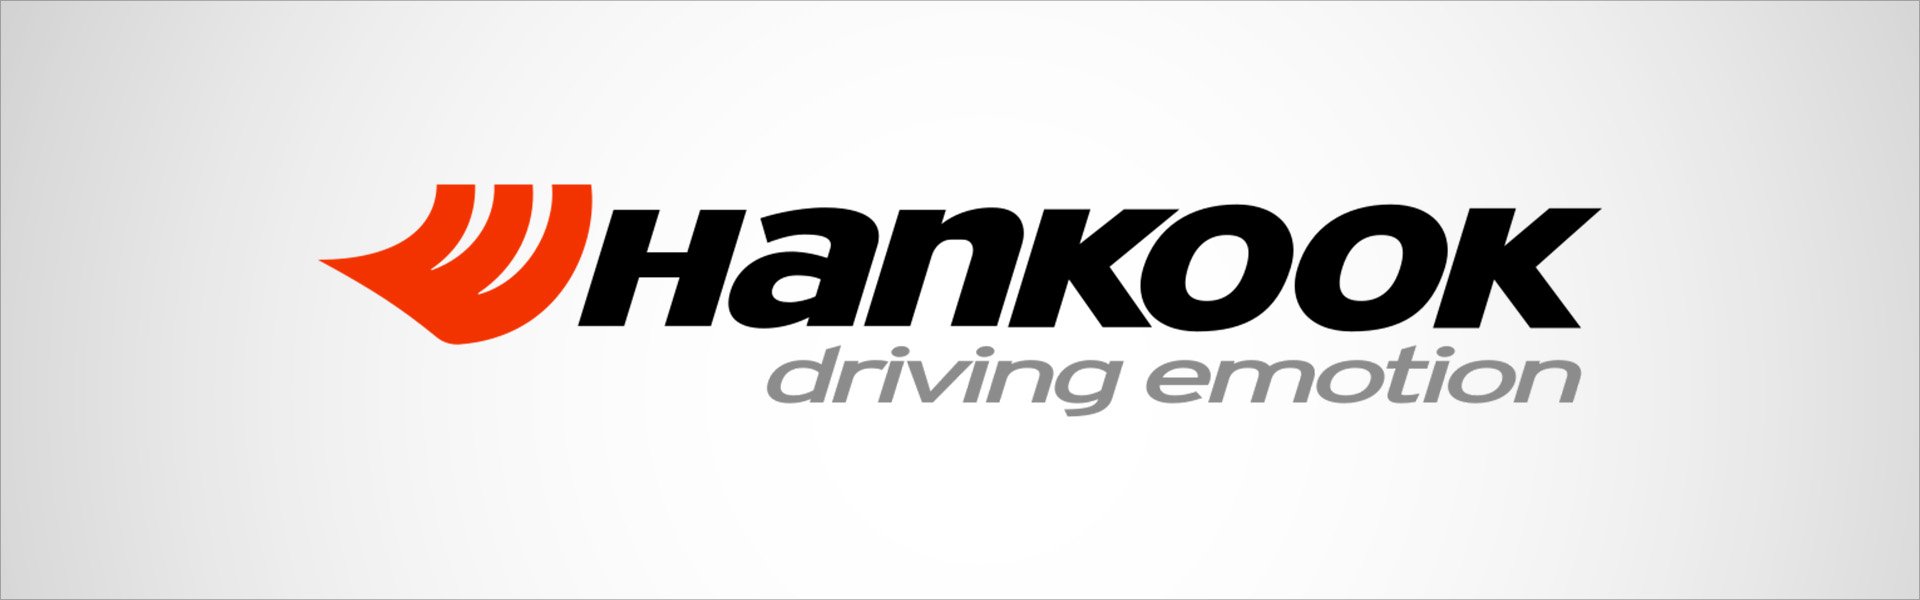 Hankook W419 215/55R17 98 T Hankook